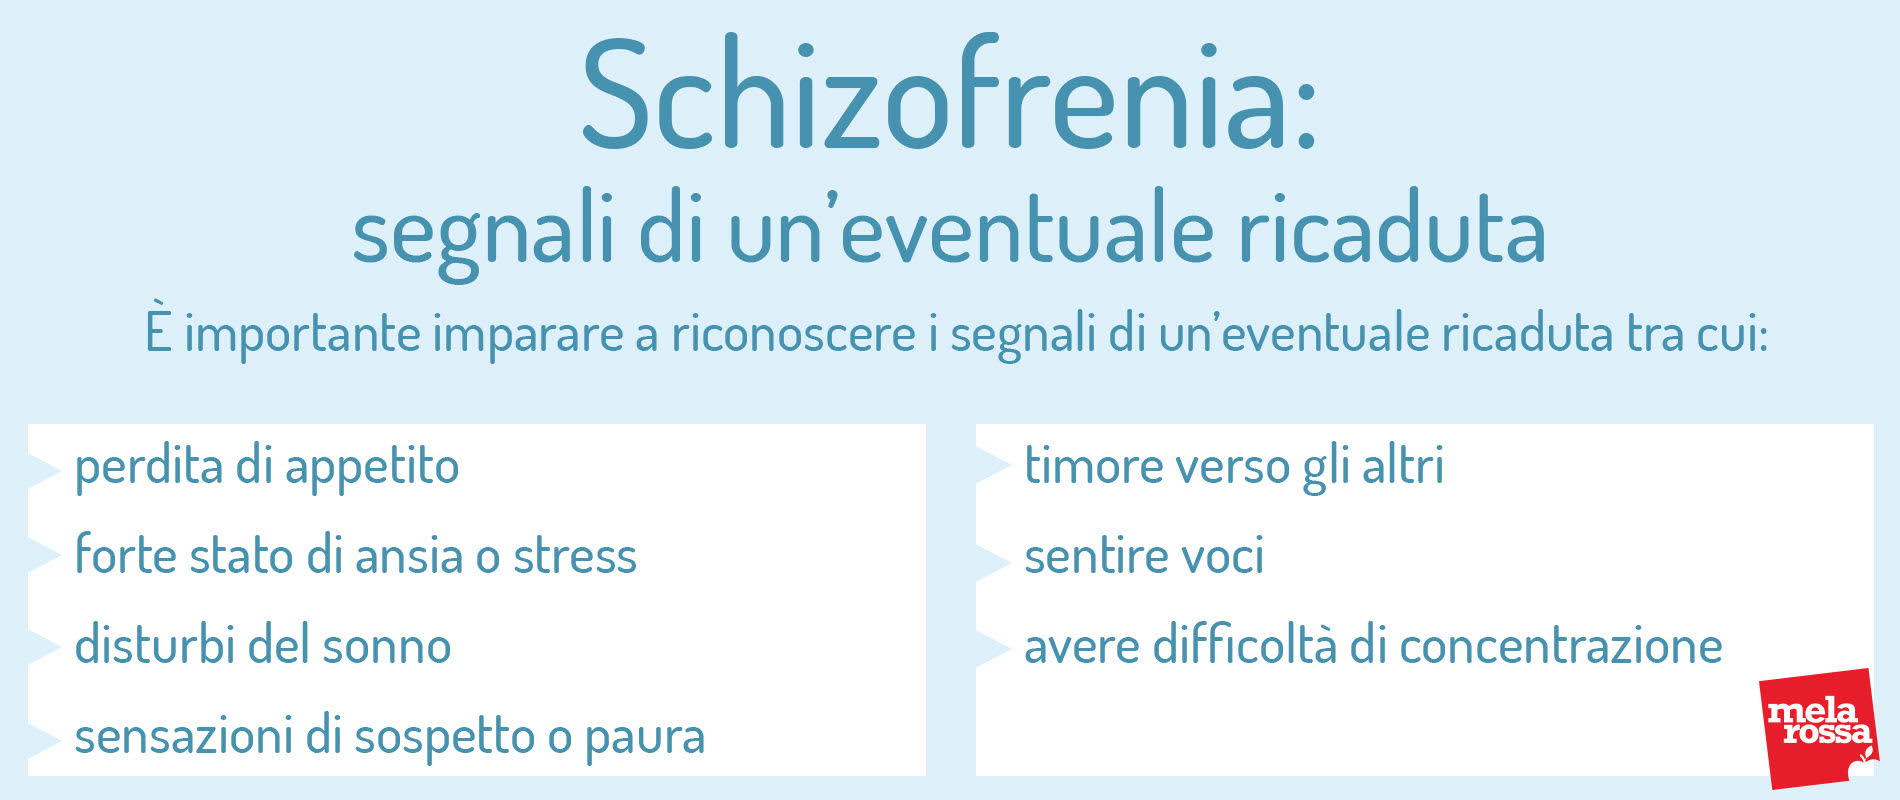 Schizofrenia: segnali ricaduta 